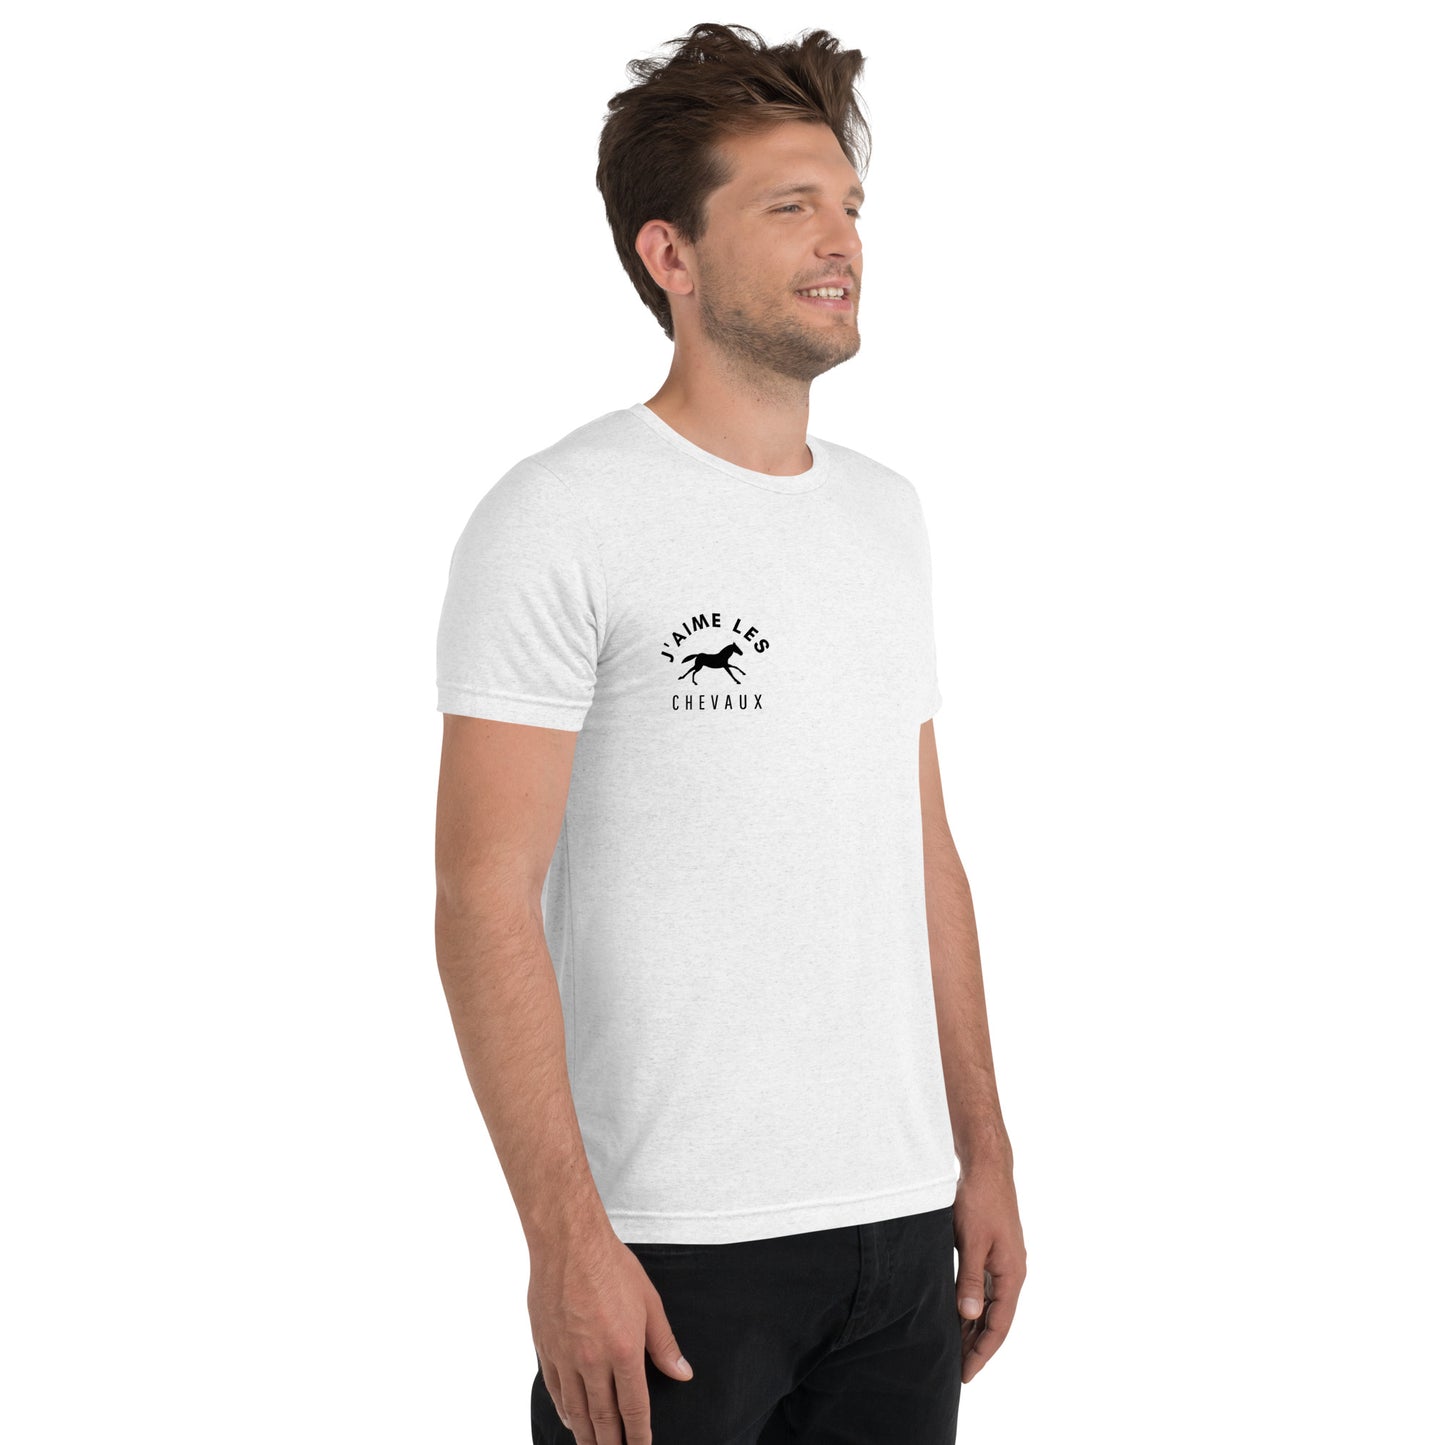 "I Love Horses" In French - White Unisex Short Sleeve T-shirt